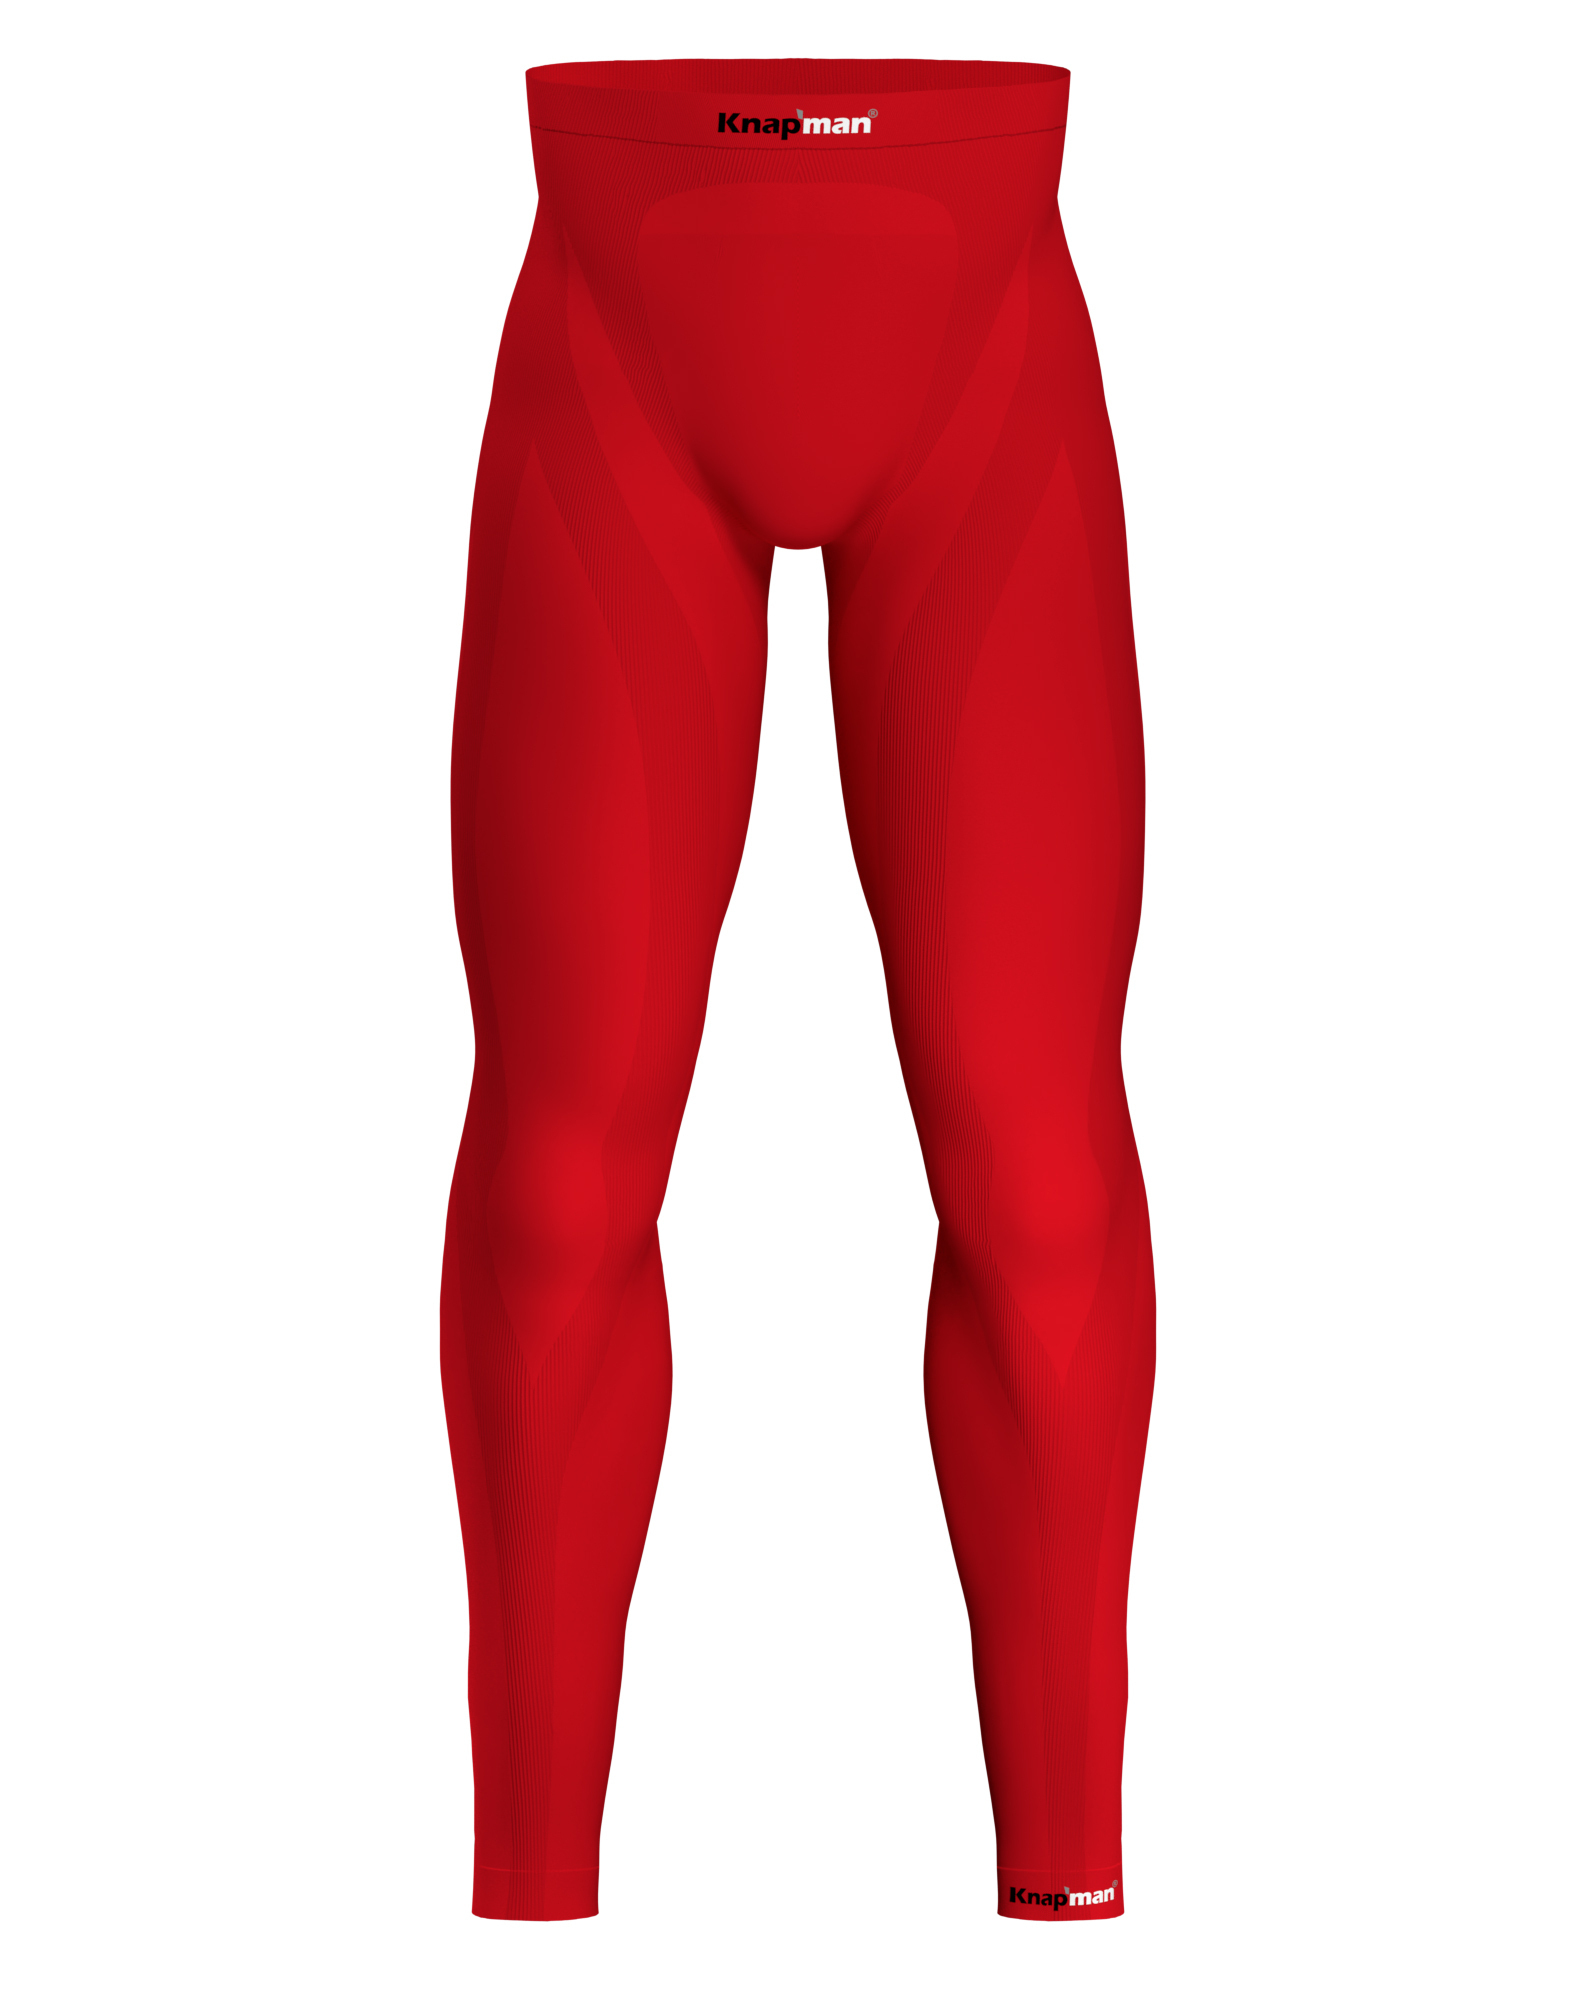 Knap'man Compression Pants Red - 25%